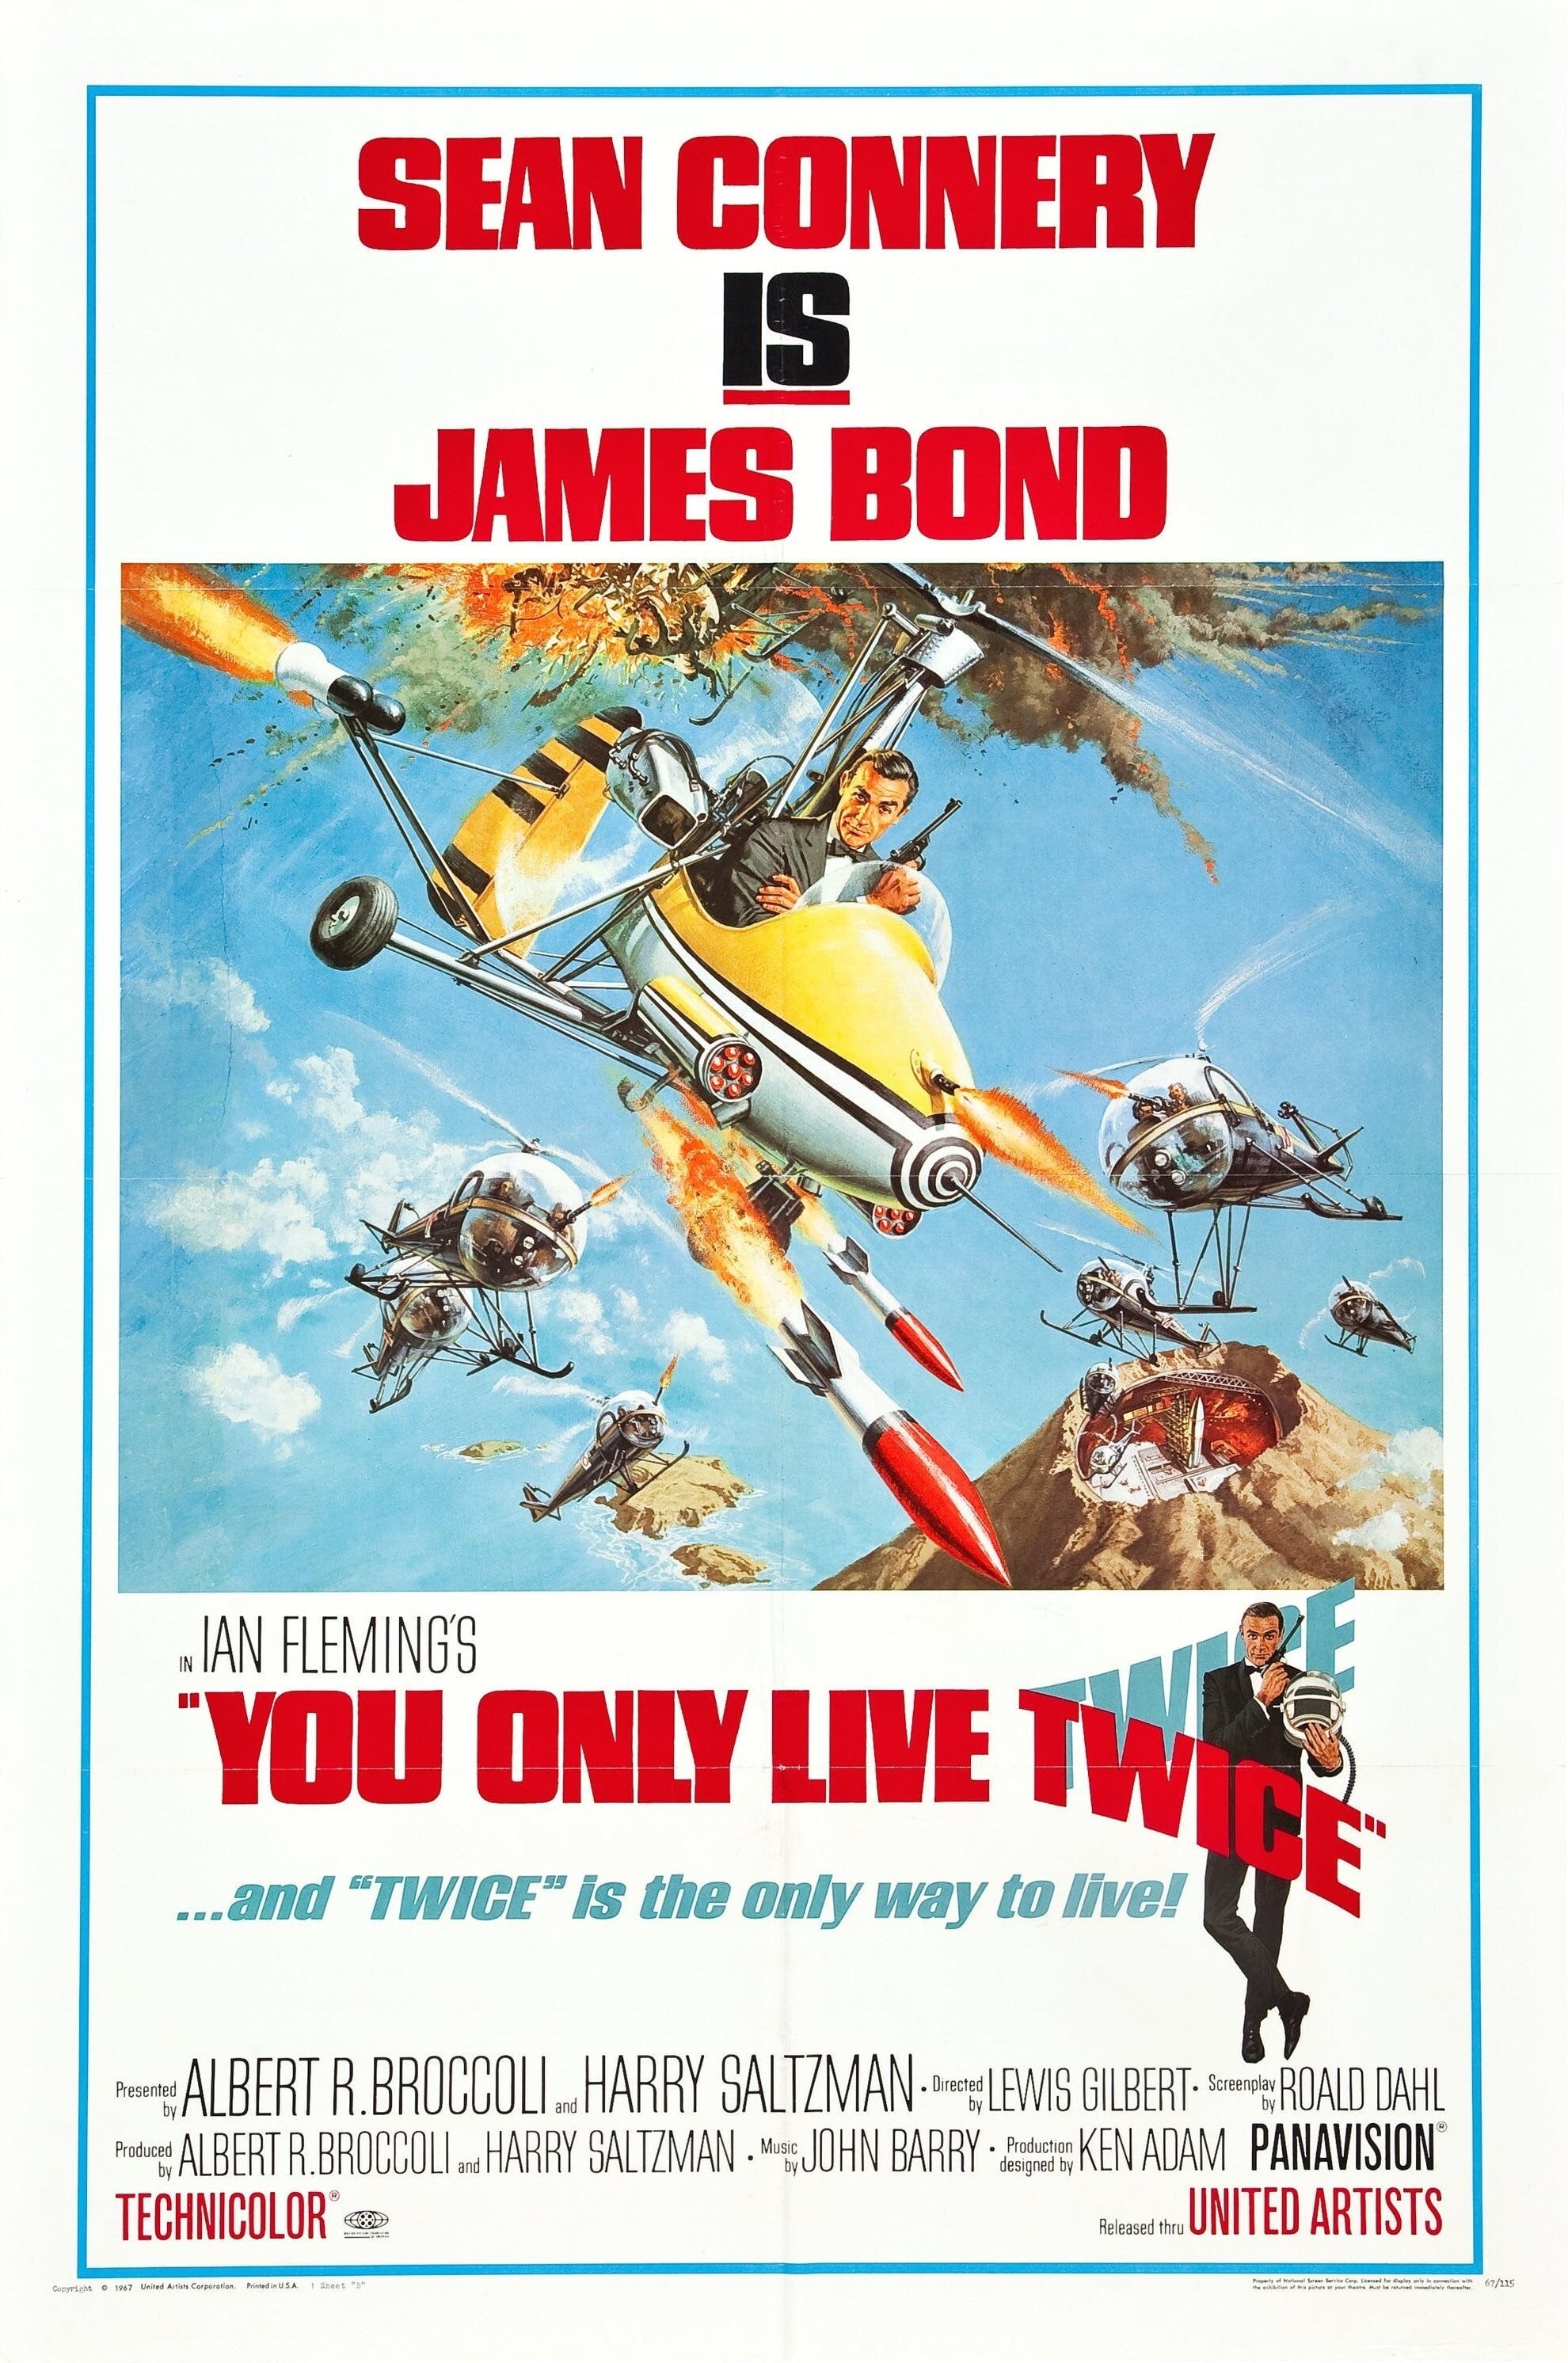 Dwayne Johnson shares James Bond aspirations after grandfather played  villain in 1967